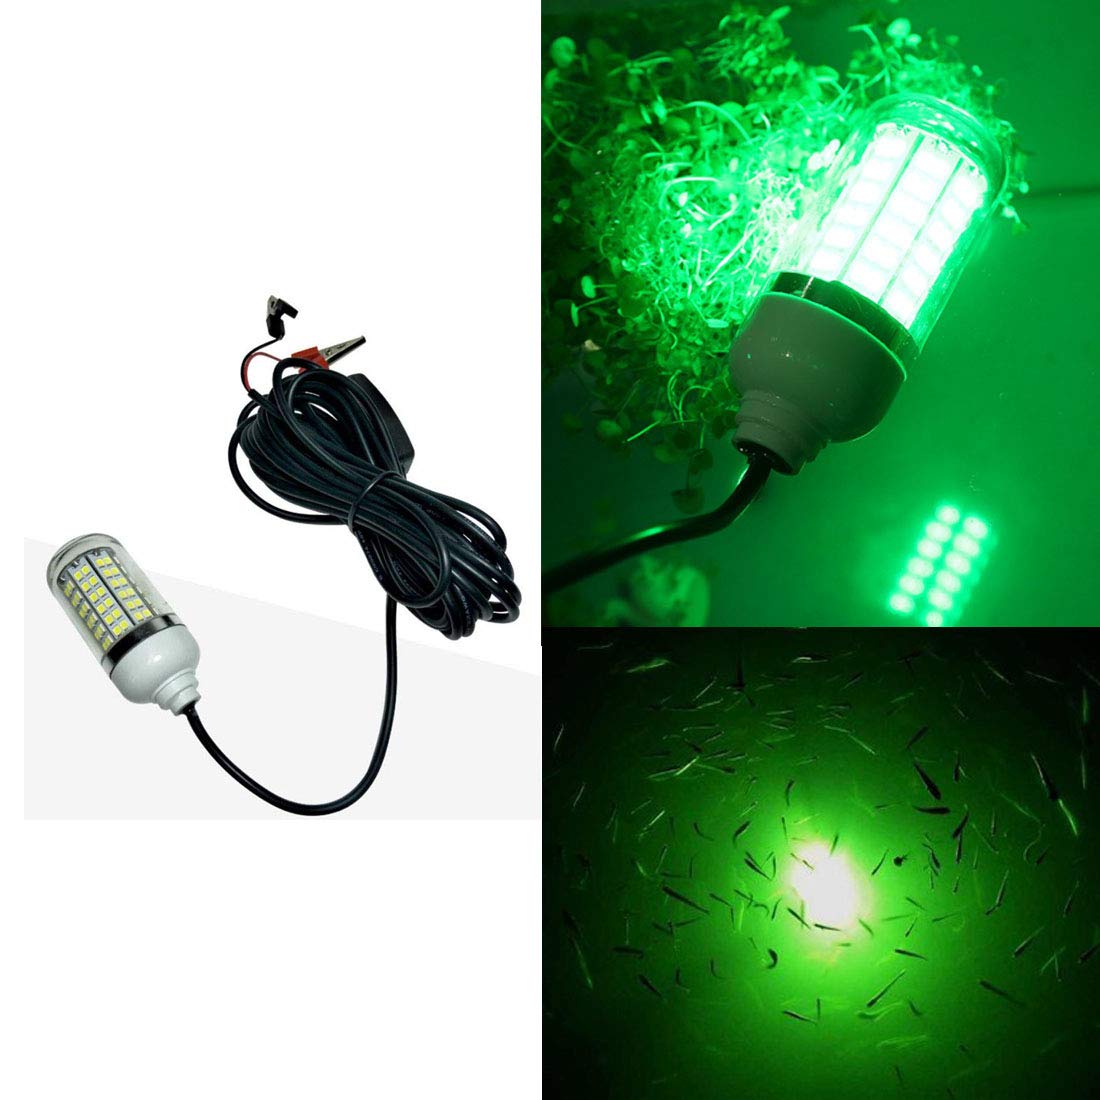 Underwater Fishing LED Light 15w,12v,Green Light IP68 Waterproof